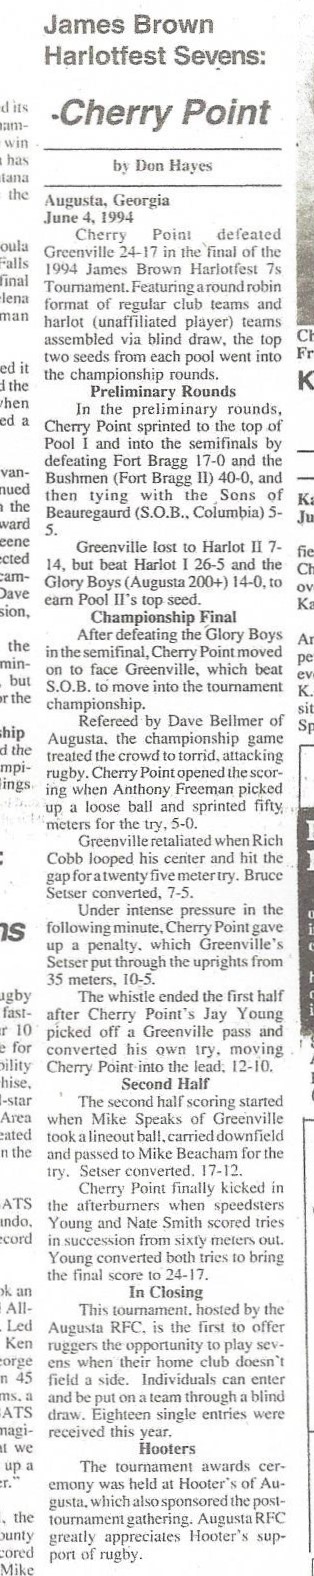 1994 Cherry Point James Brown Tournament.jpg